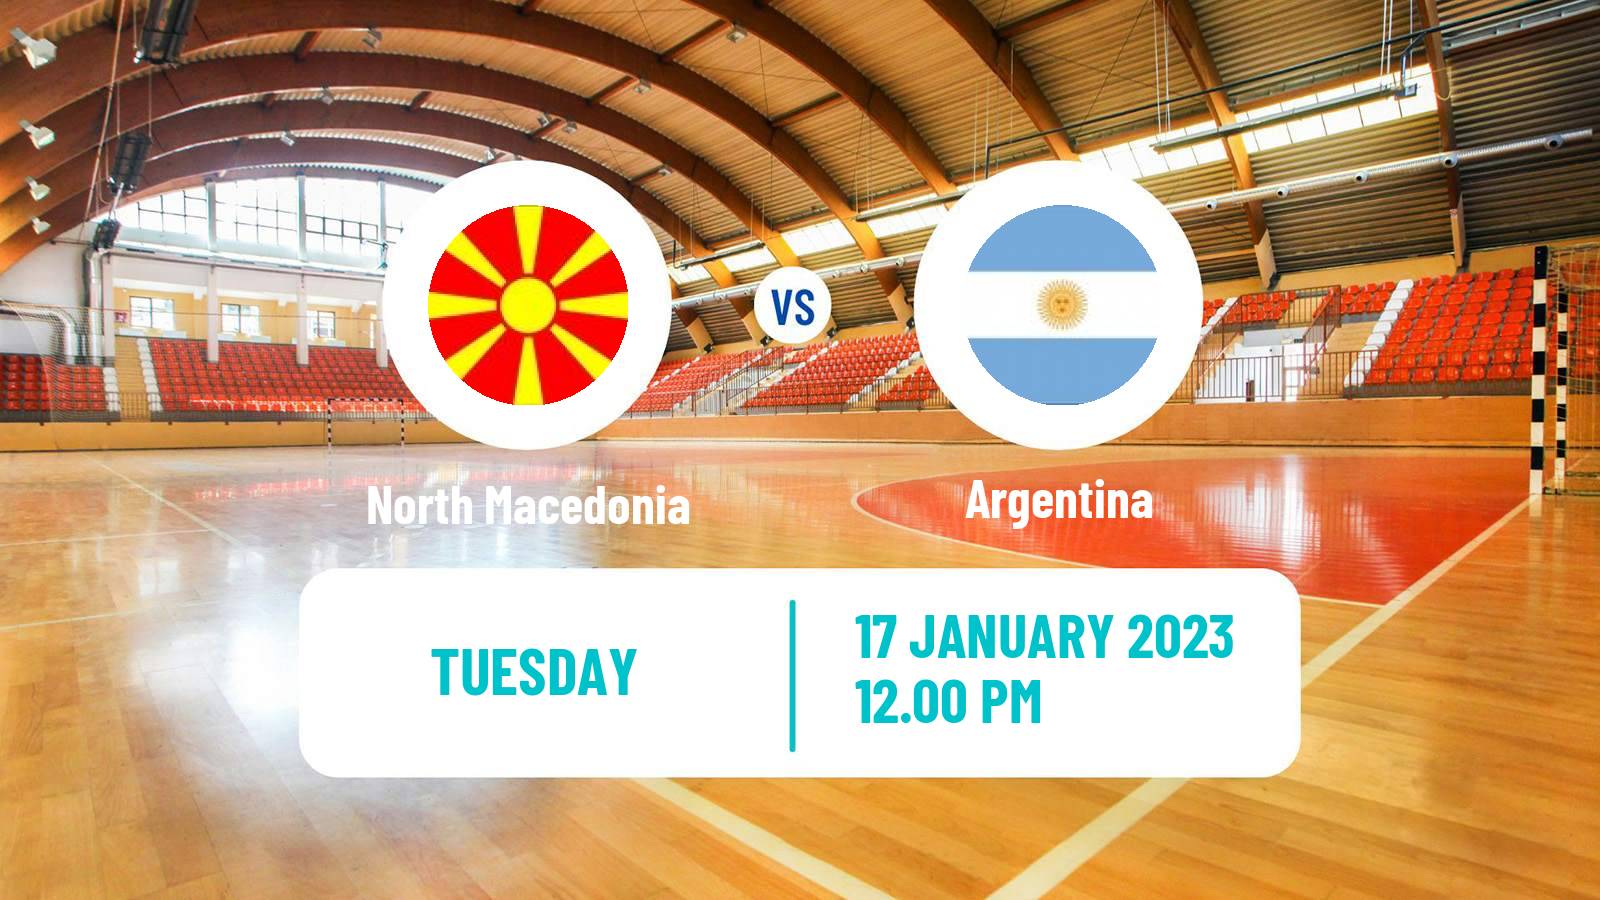 Handball Handball World Championship North Macedonia - Argentina